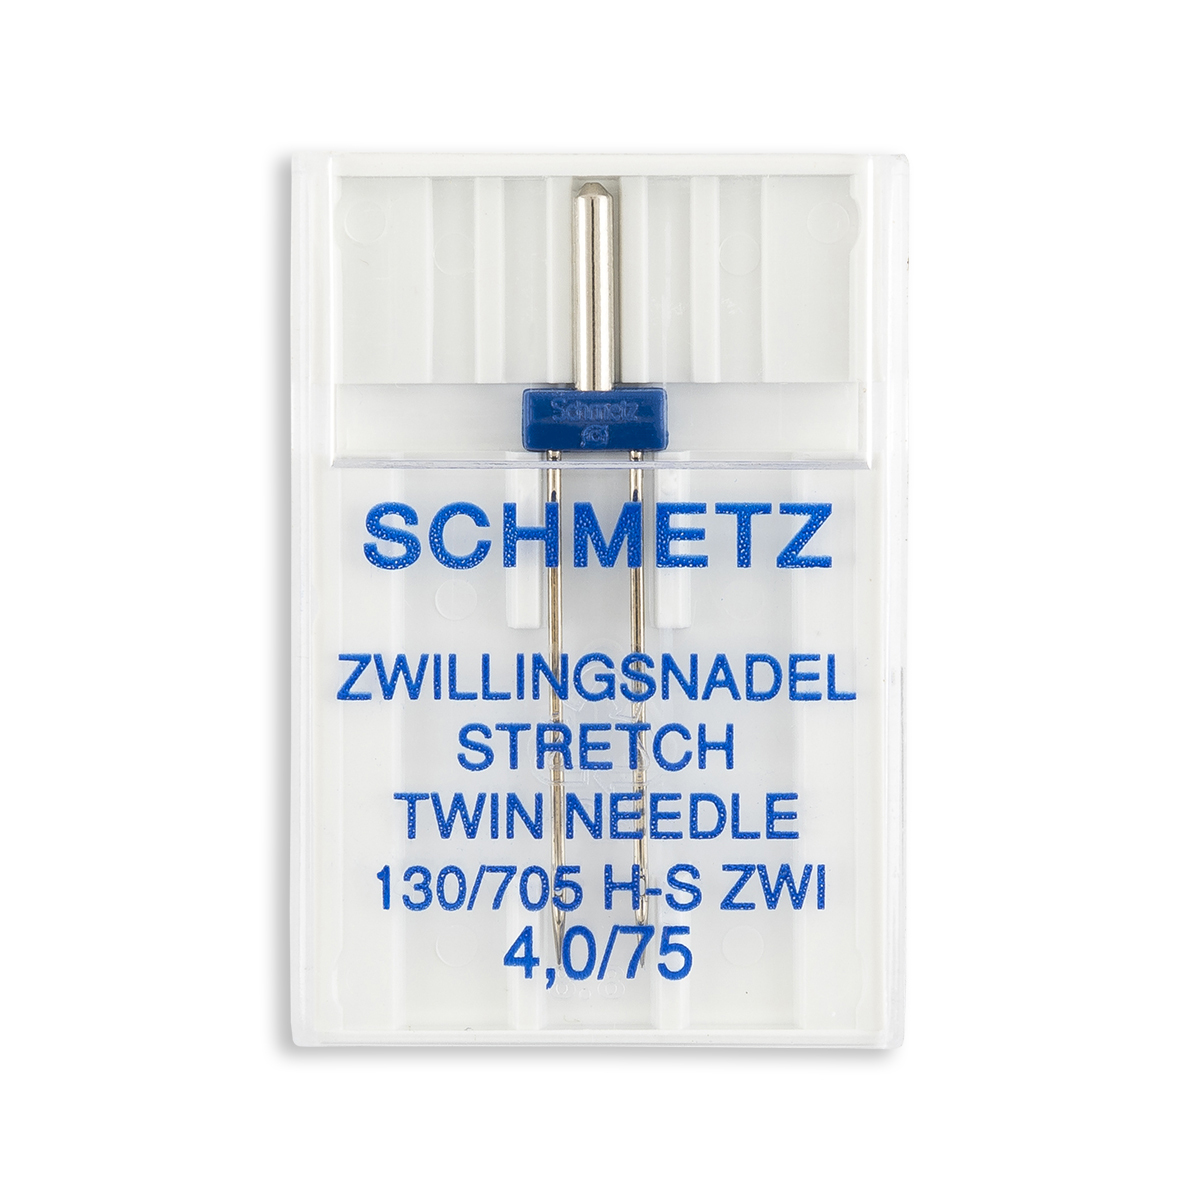 Schmetz Microtex Home Machine Needles - 15x1, 130/705 H-M - 5/Pack - WAWAK  Sewing Supplies